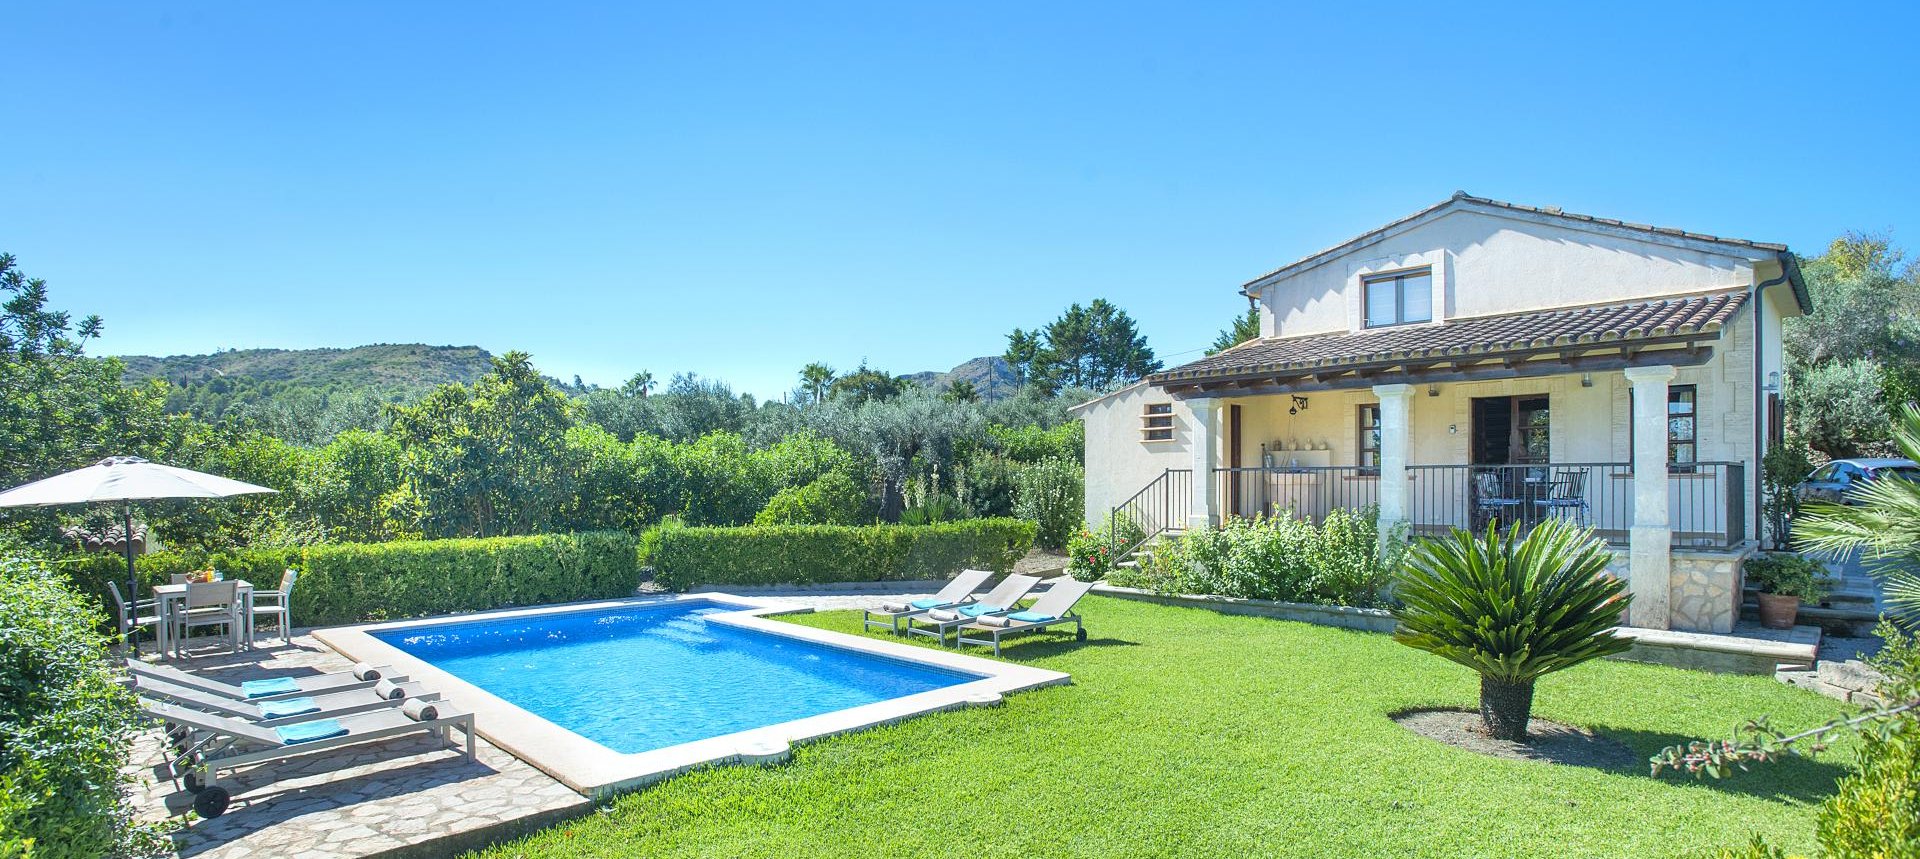 Ferienhaus Mallorca mit Pool für 6 Personen bei Alcudia mieten